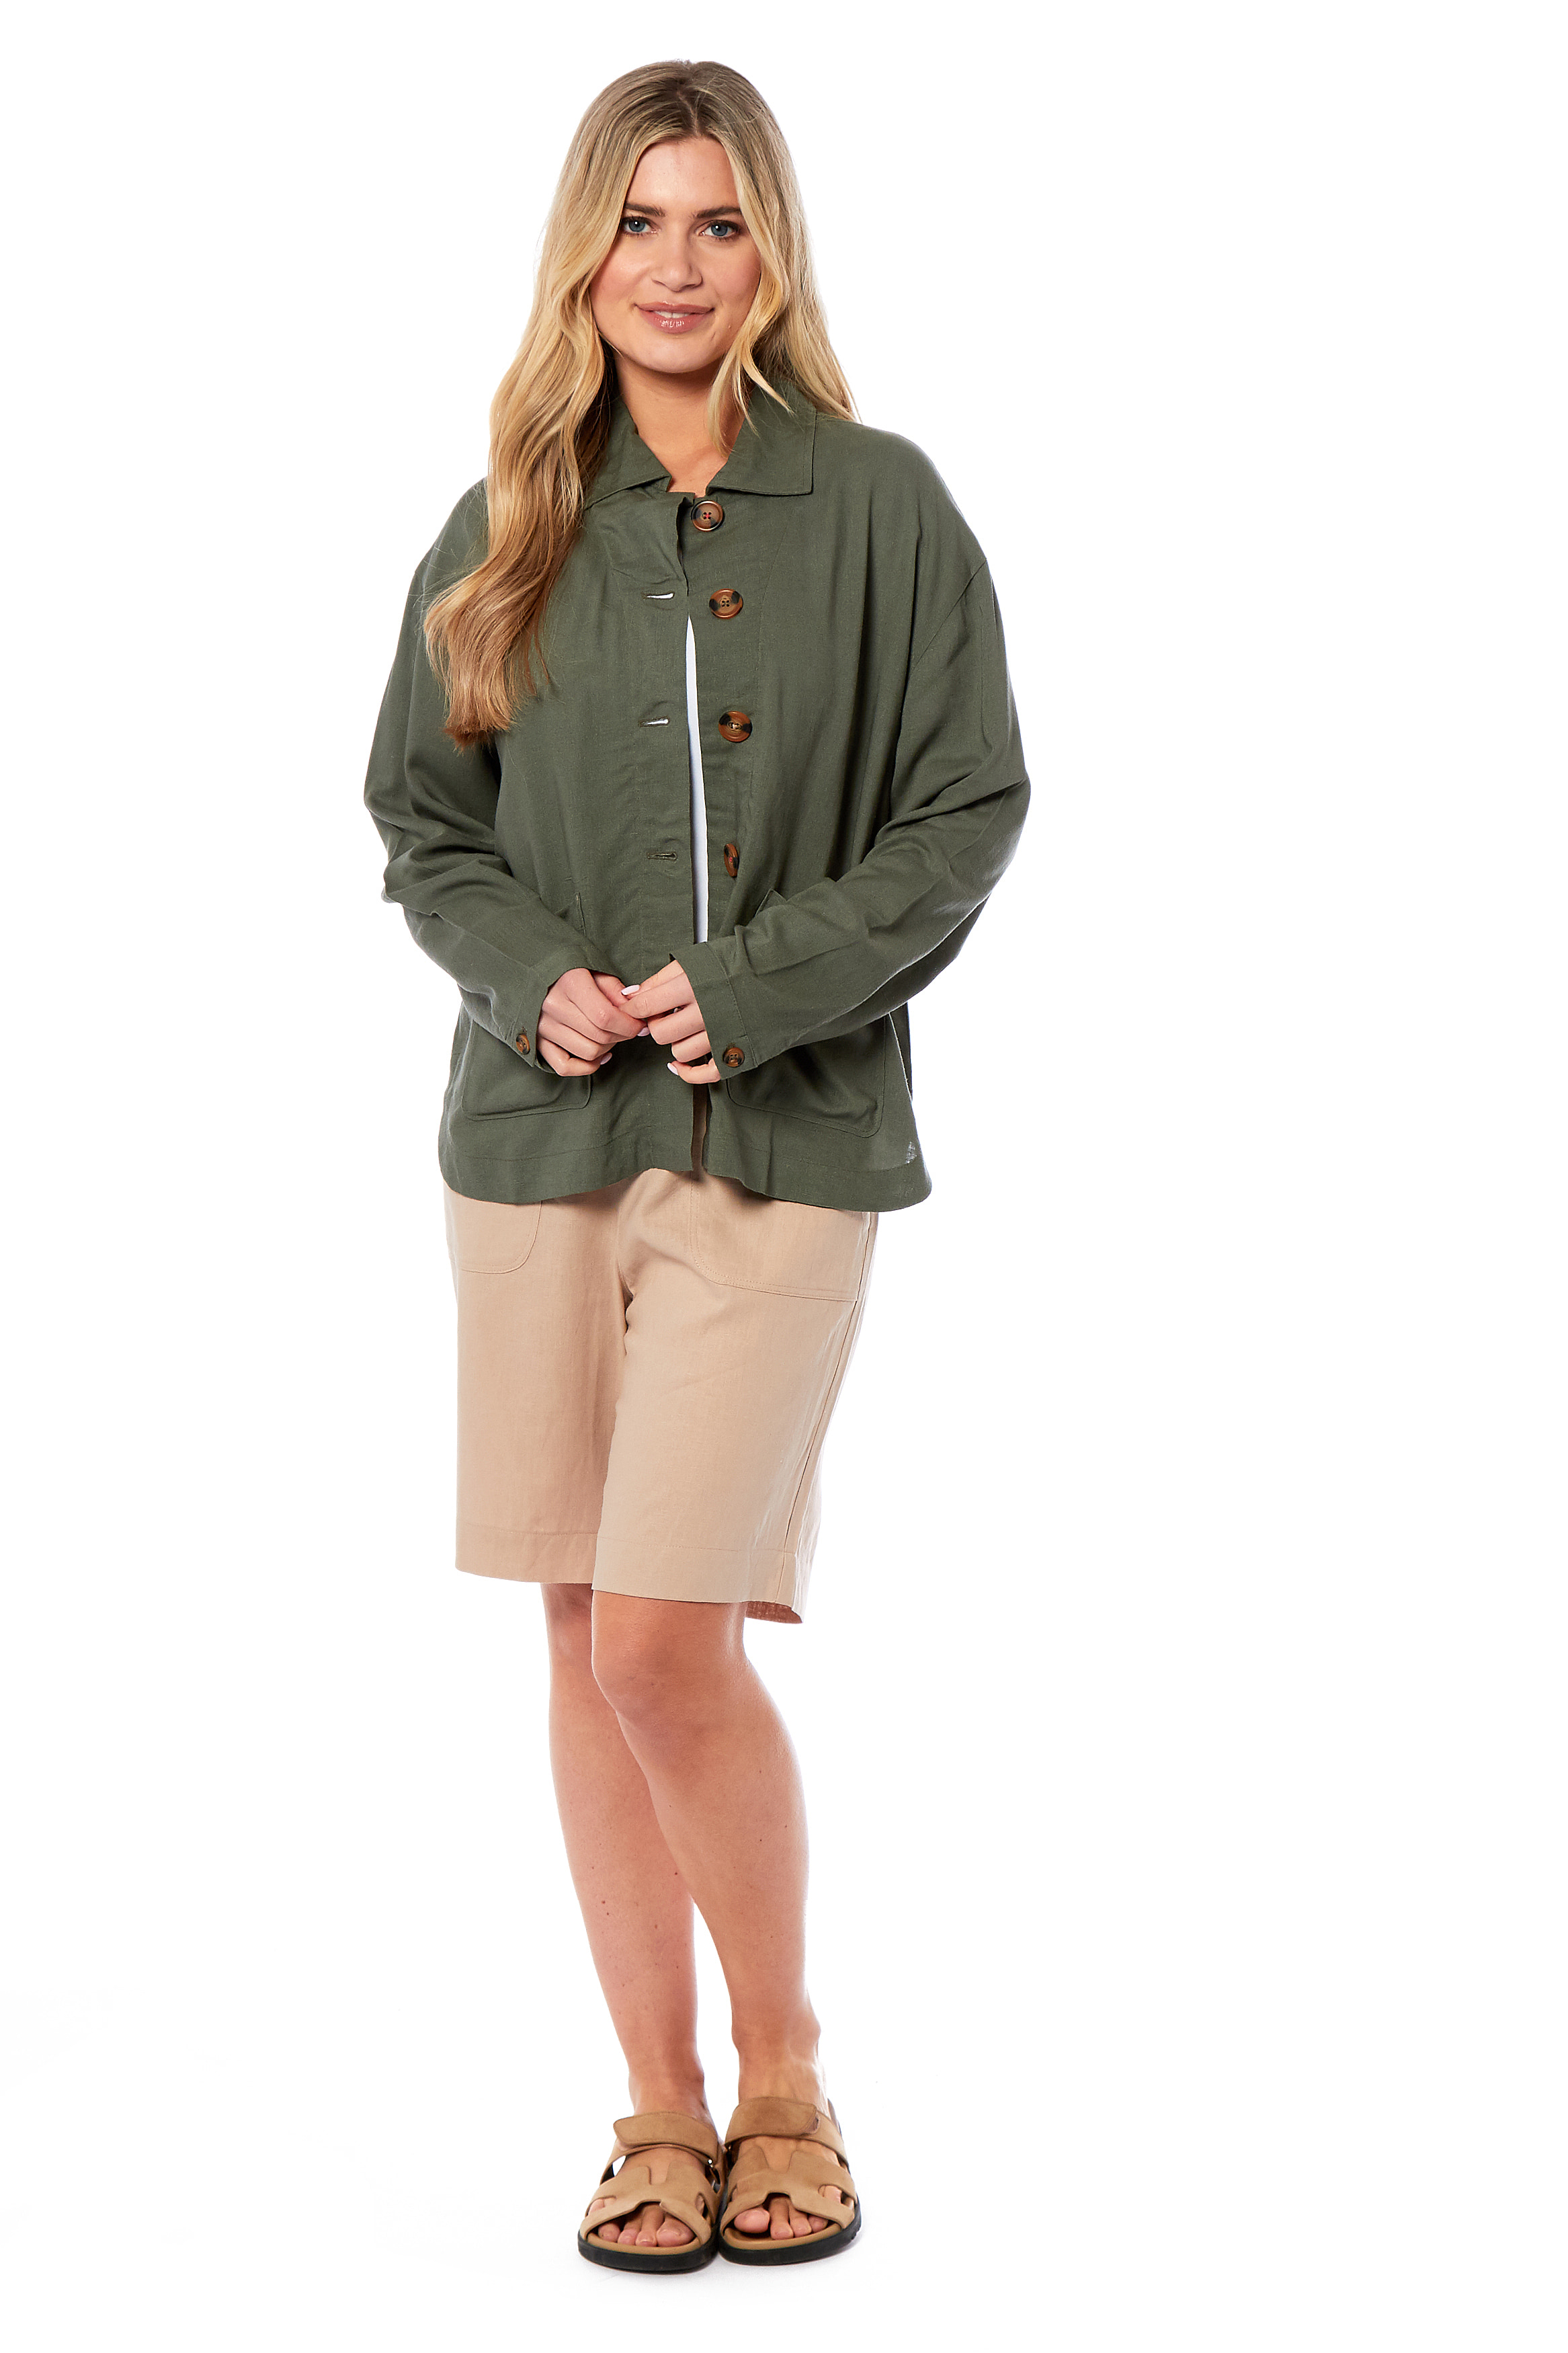 Charlotte West Ladies Linen Jacket (Size 16) - Khaki